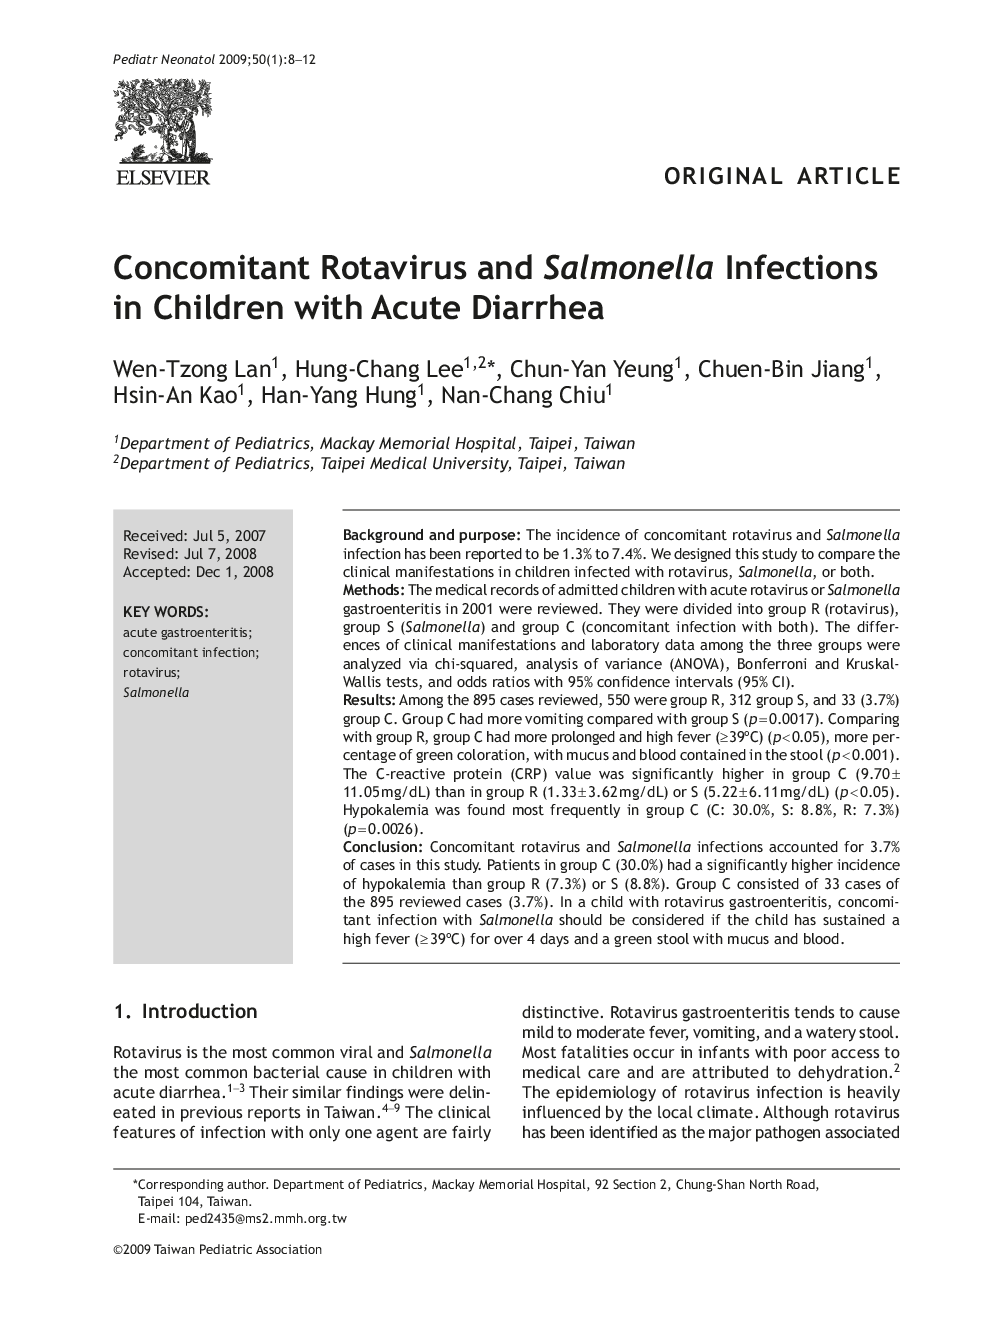 Concomitant Rotavirus and Salmonella Infections in Children with Acute Diarrhea